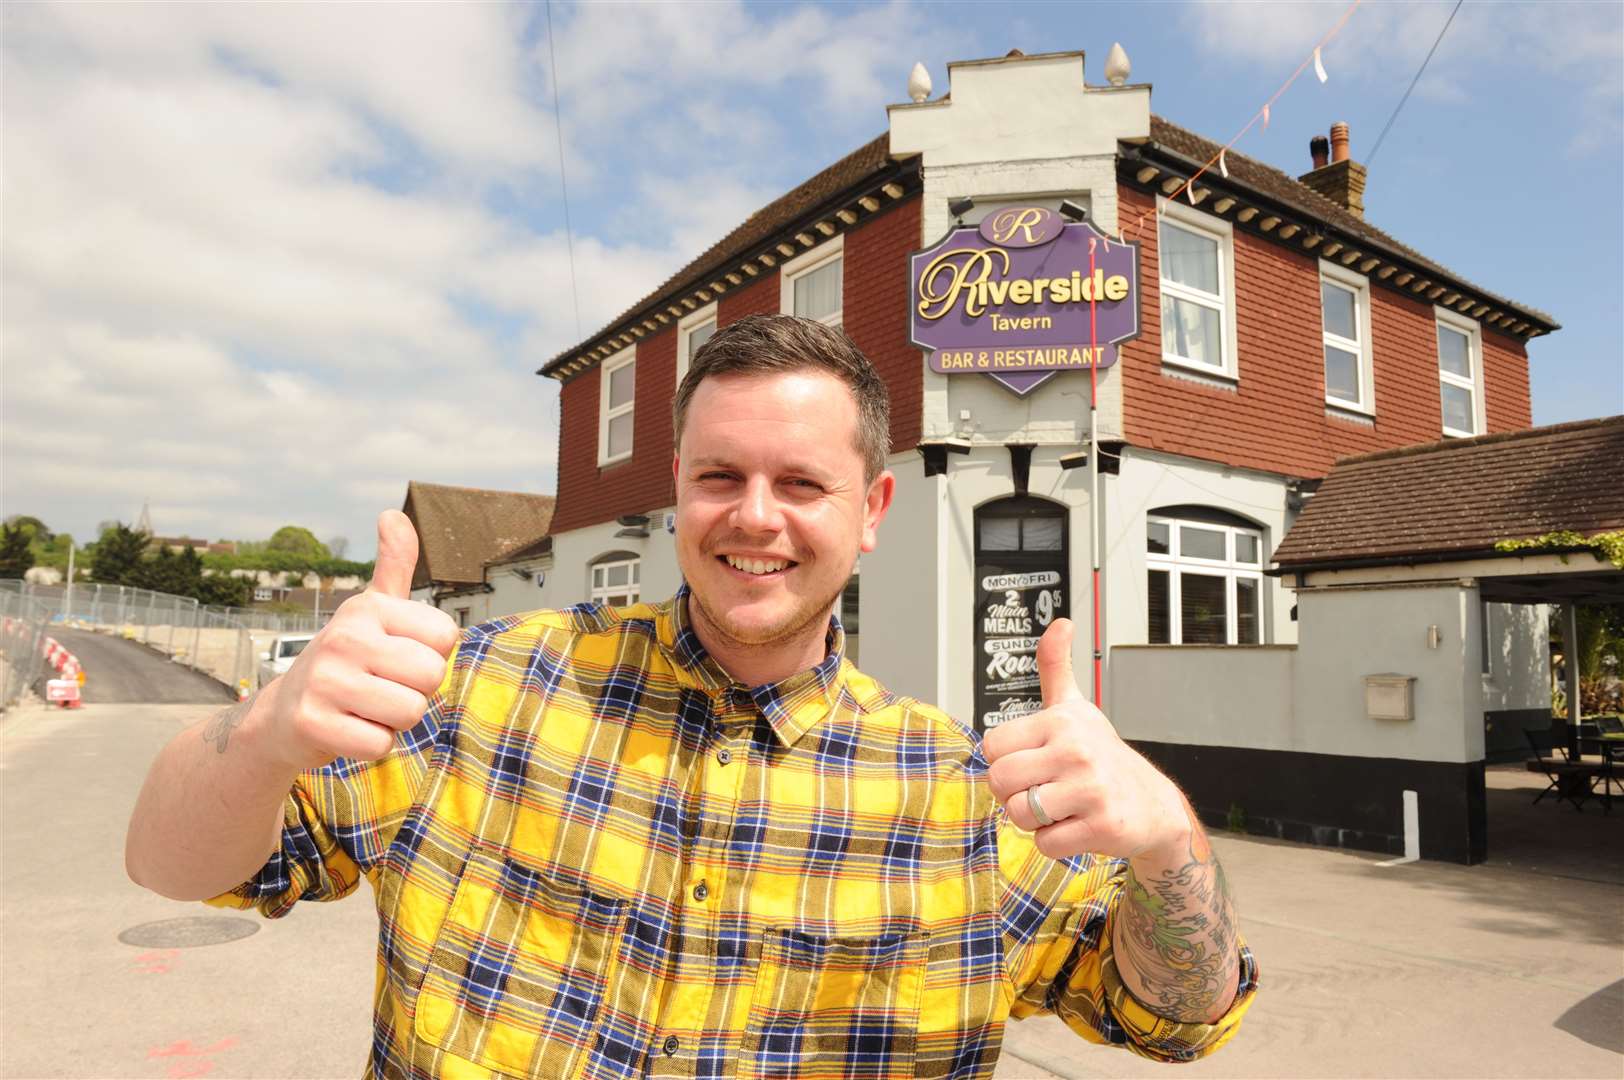 Luke took over the pub as the Riverside Tavern. Picture: Steve Crispe